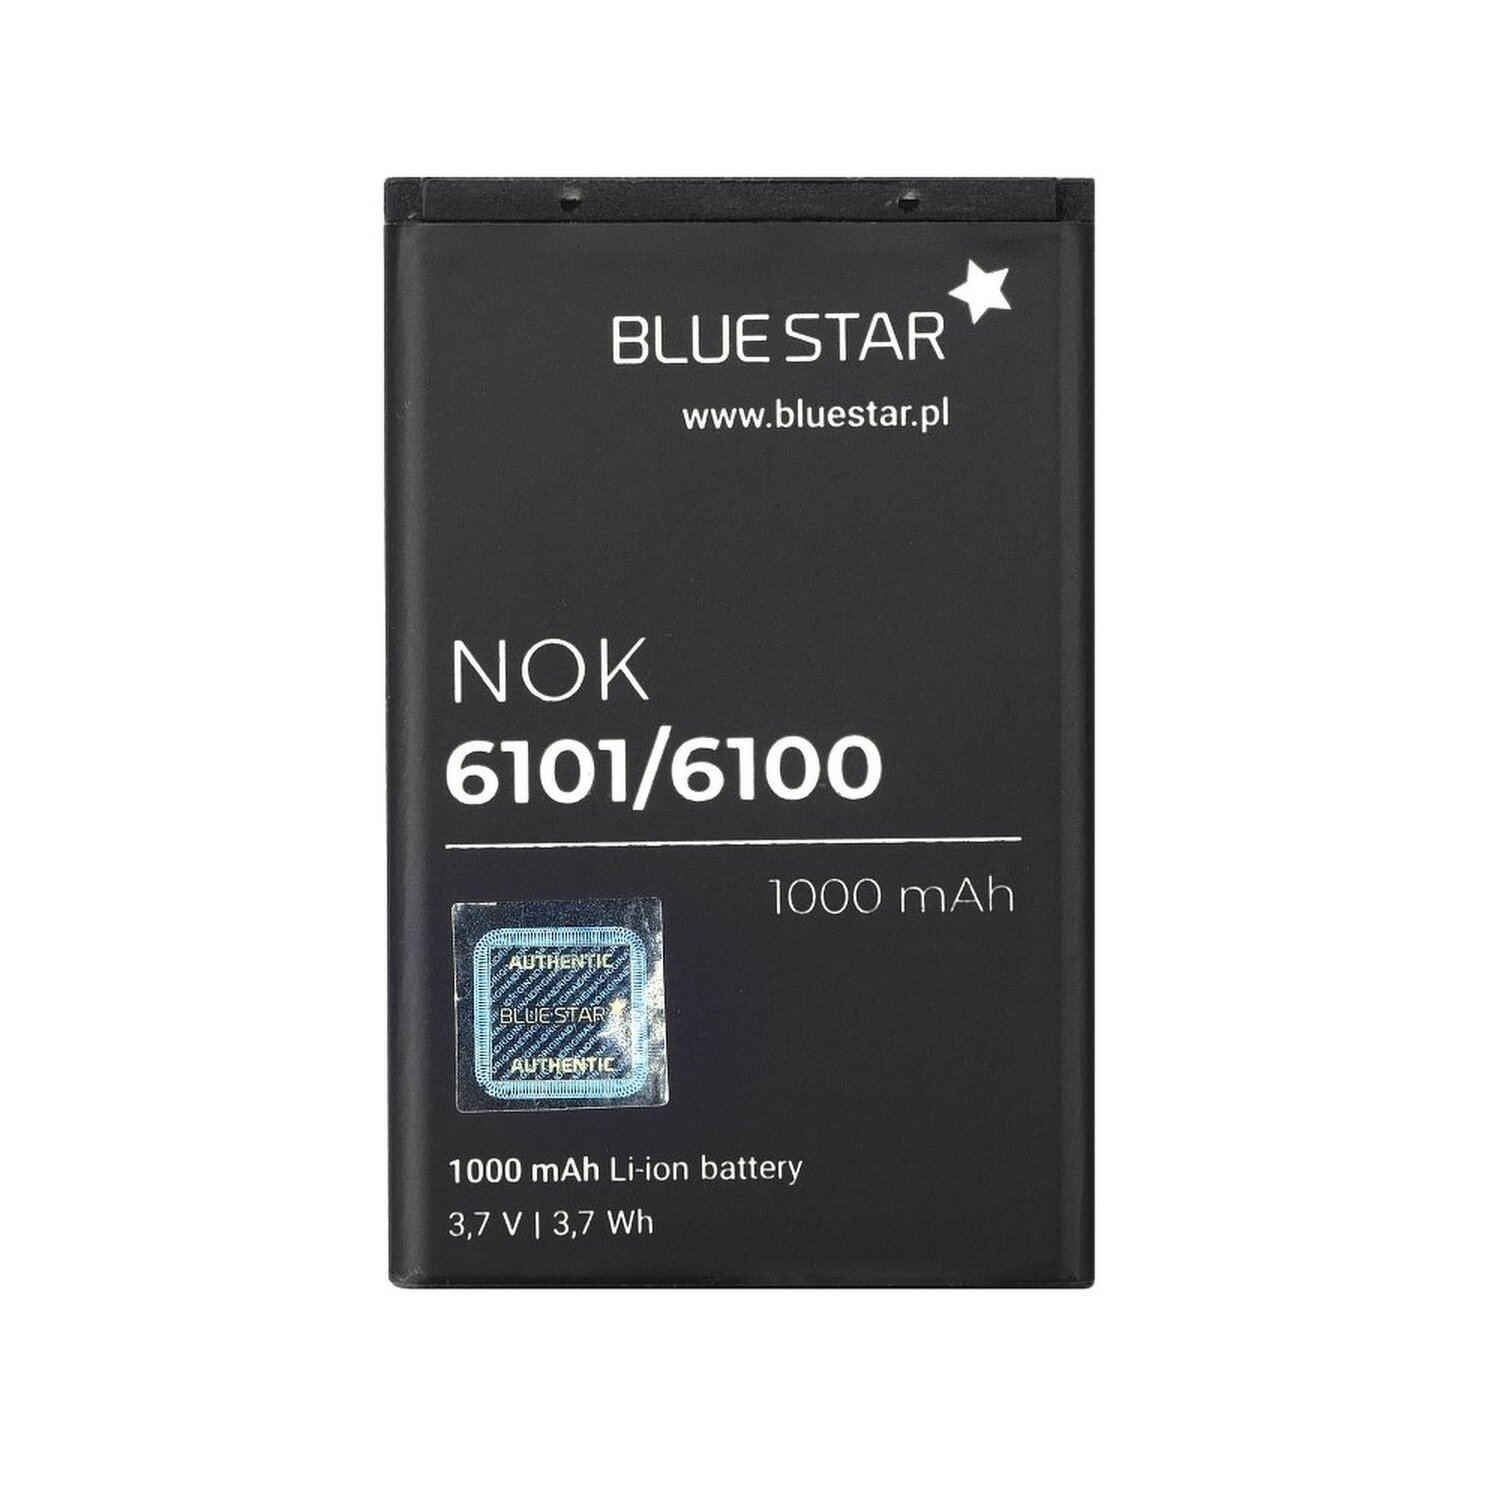 Handyakku 7200 für 7270 Li-Ion Akku / BLUESTAR Nokia